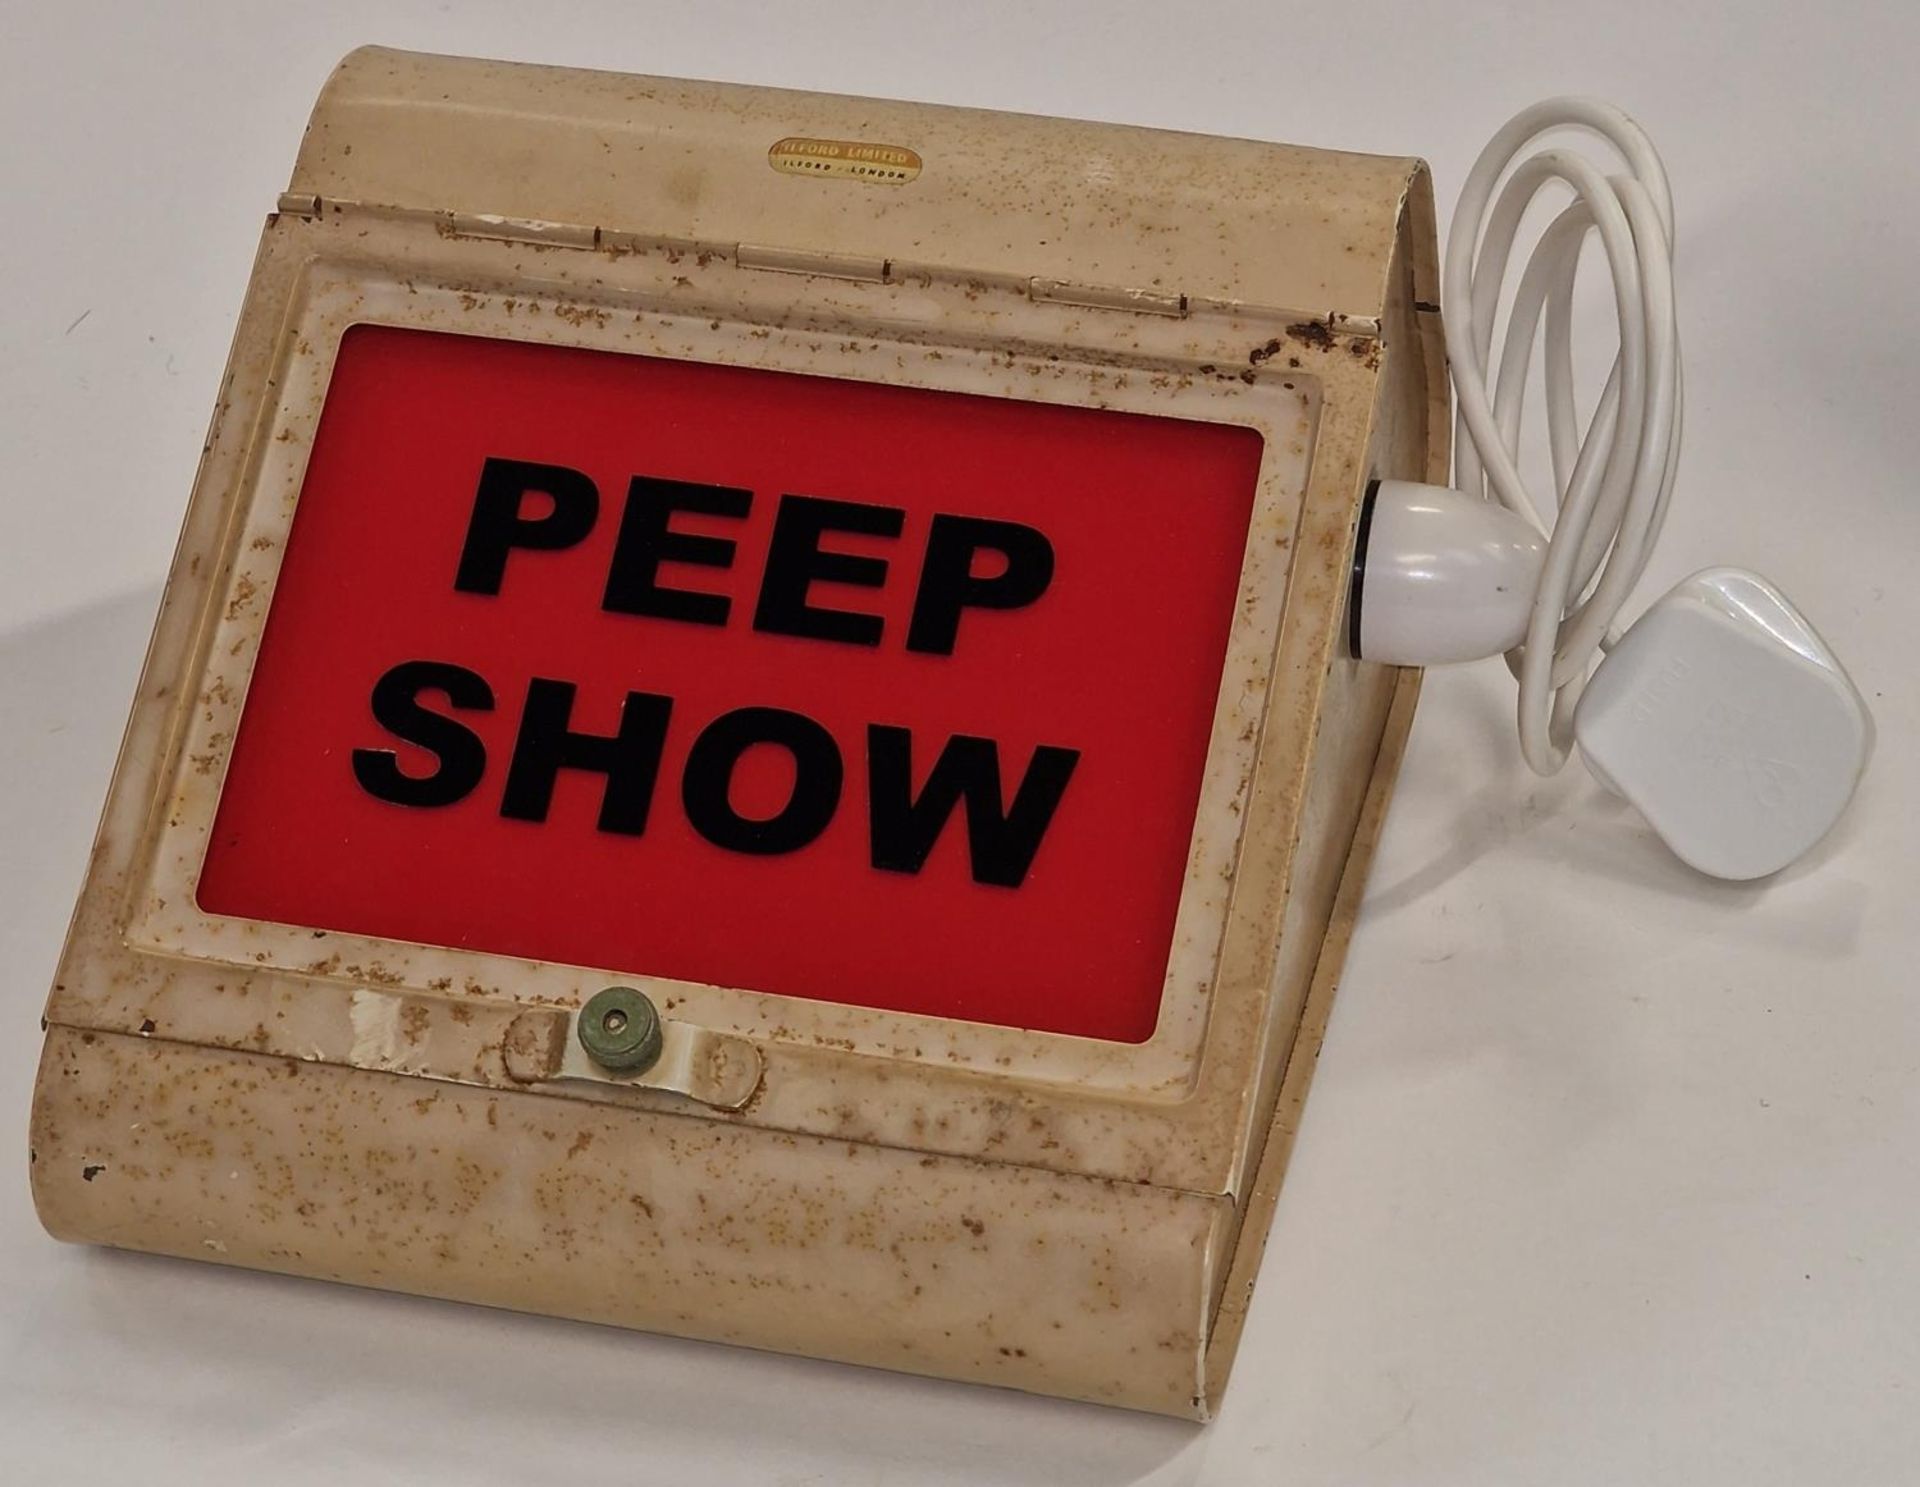 A Peep show Light box.